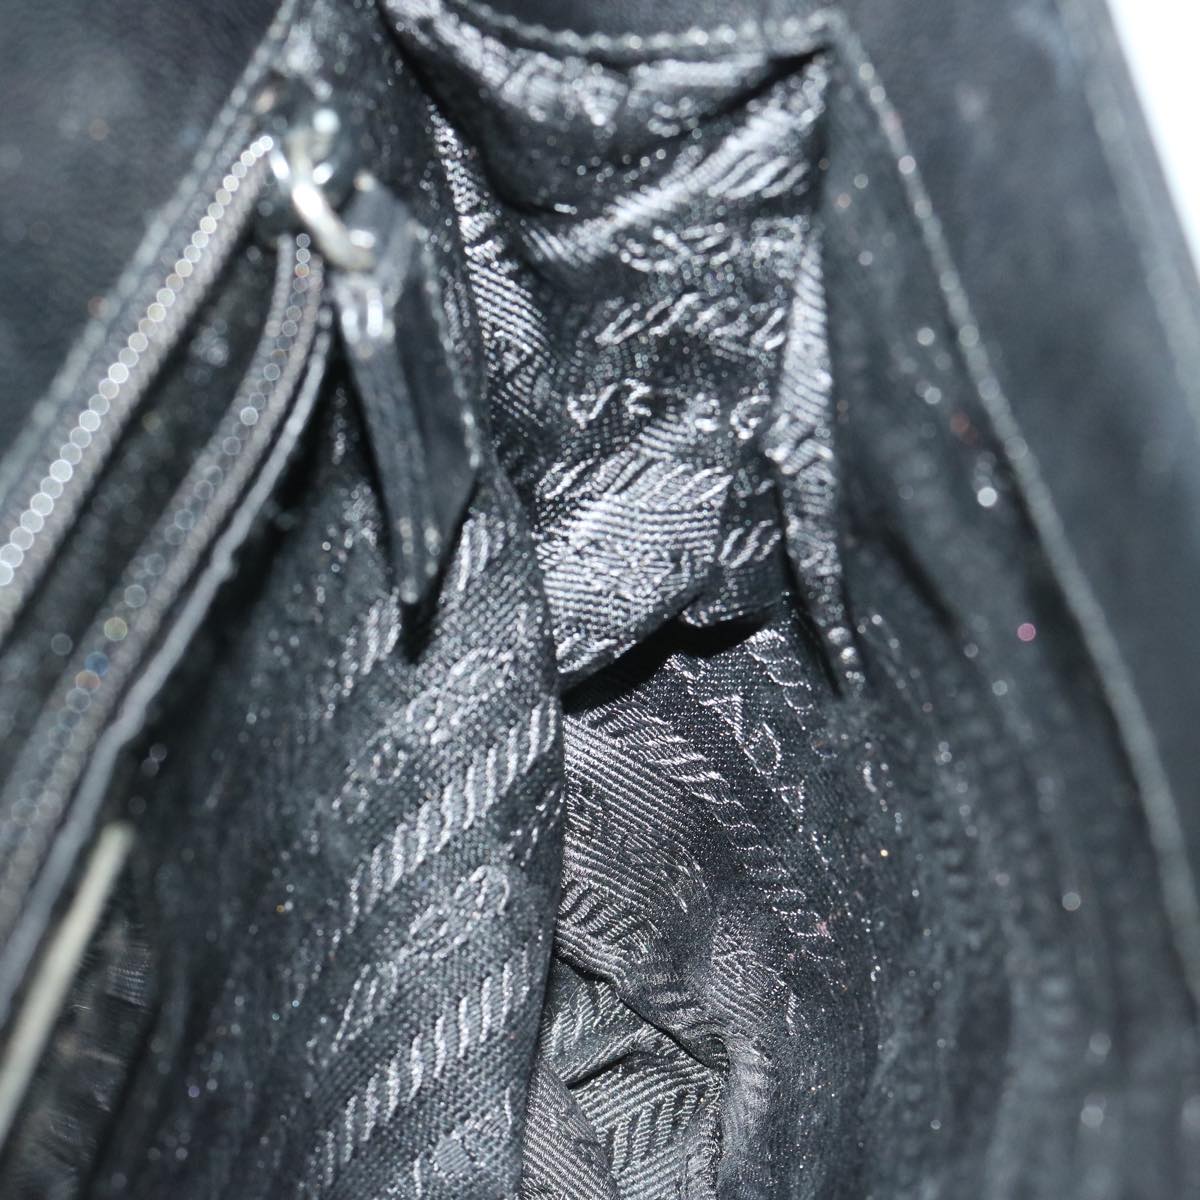 PRADA Hand Bag Leather Black Auth bs12636